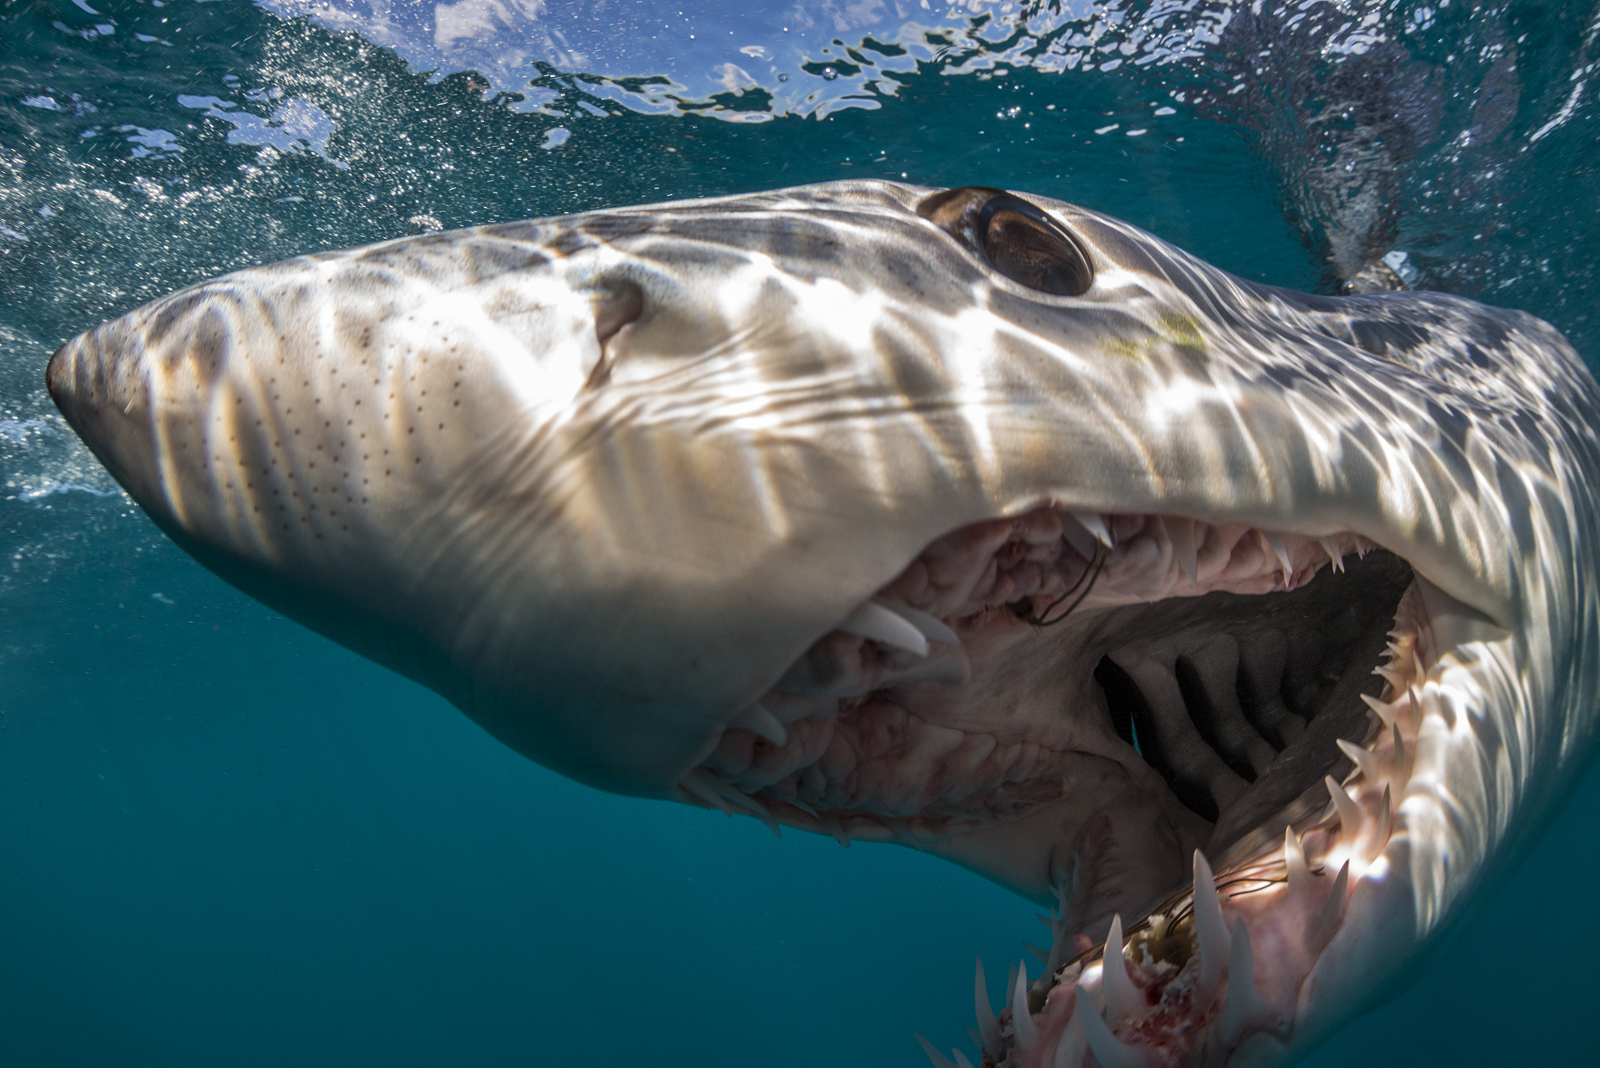 shortfin mako sharks off the west coast of the north island of new zealand.